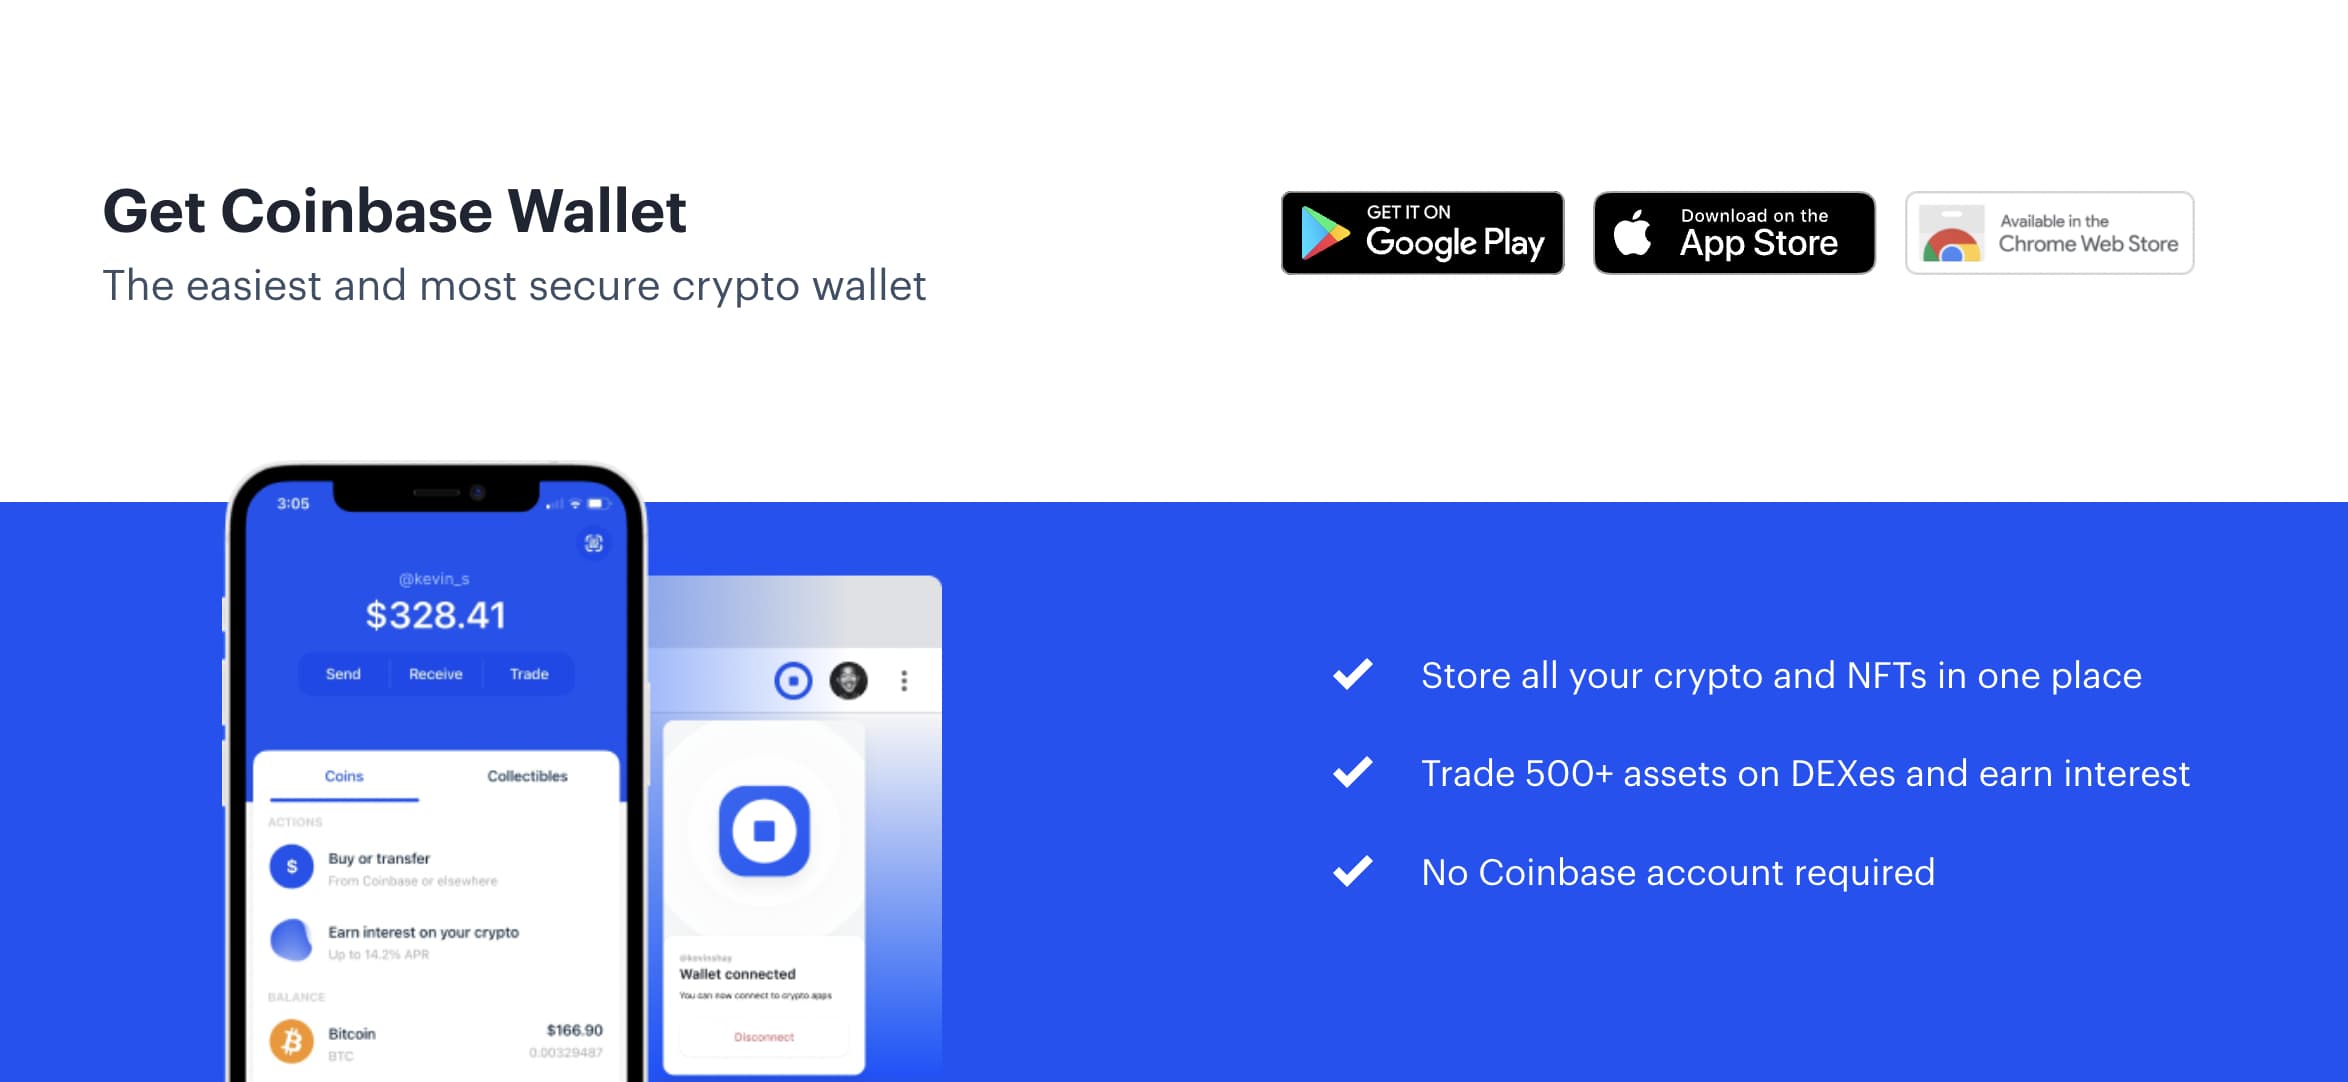 coinbase-wallet-cta (1).jpg